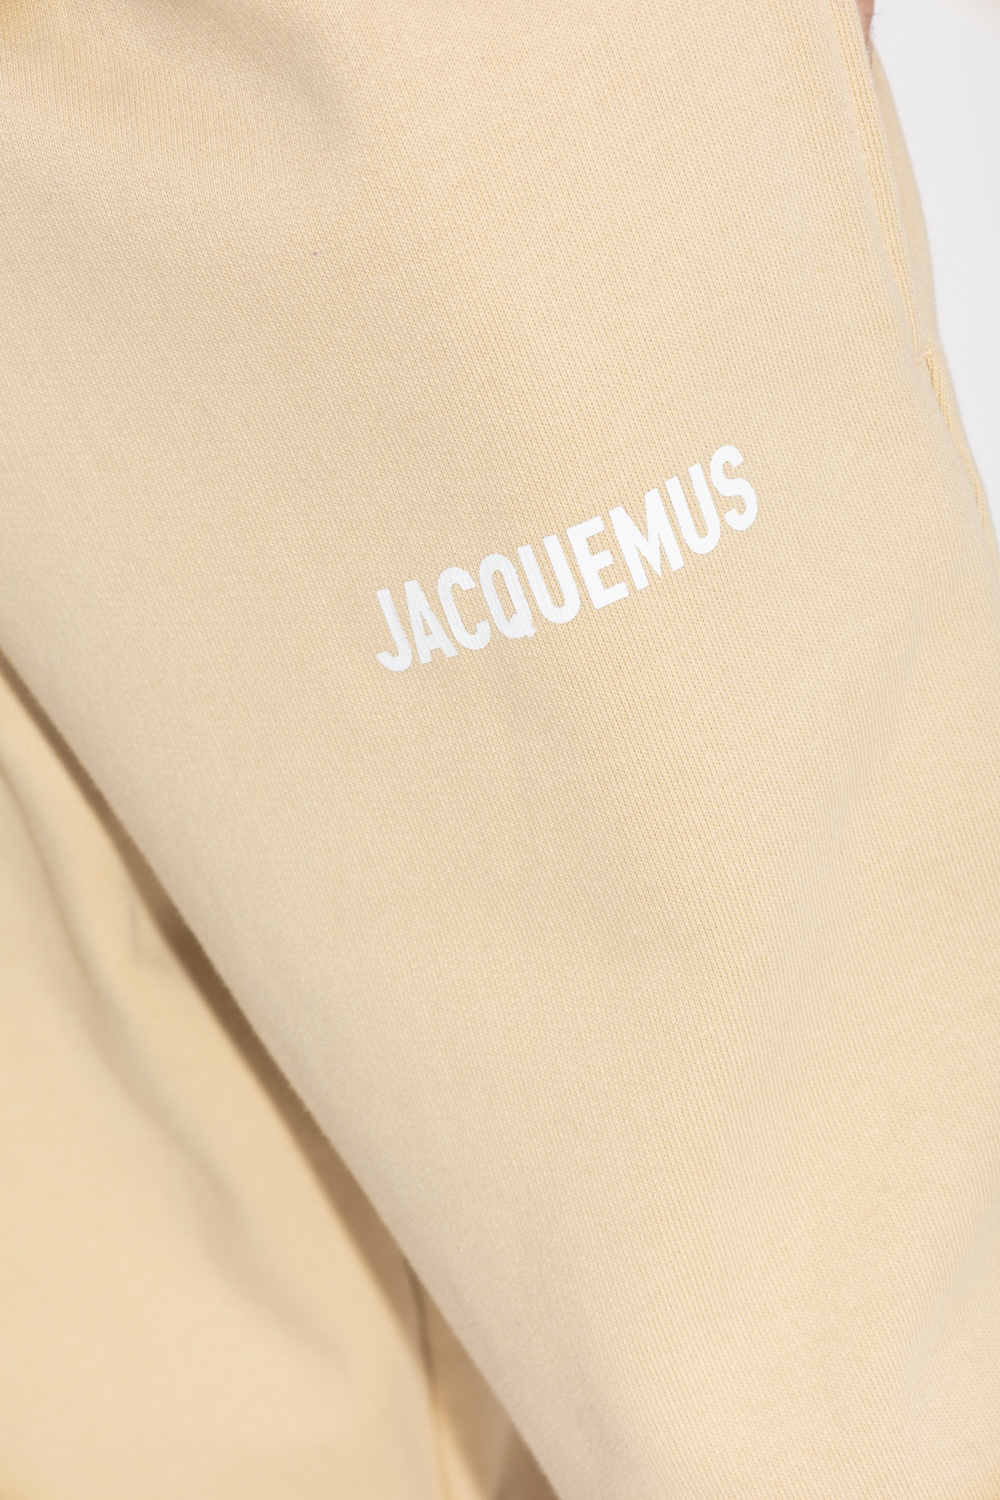 Jacquemus FRAME Le High flared stripe jeans